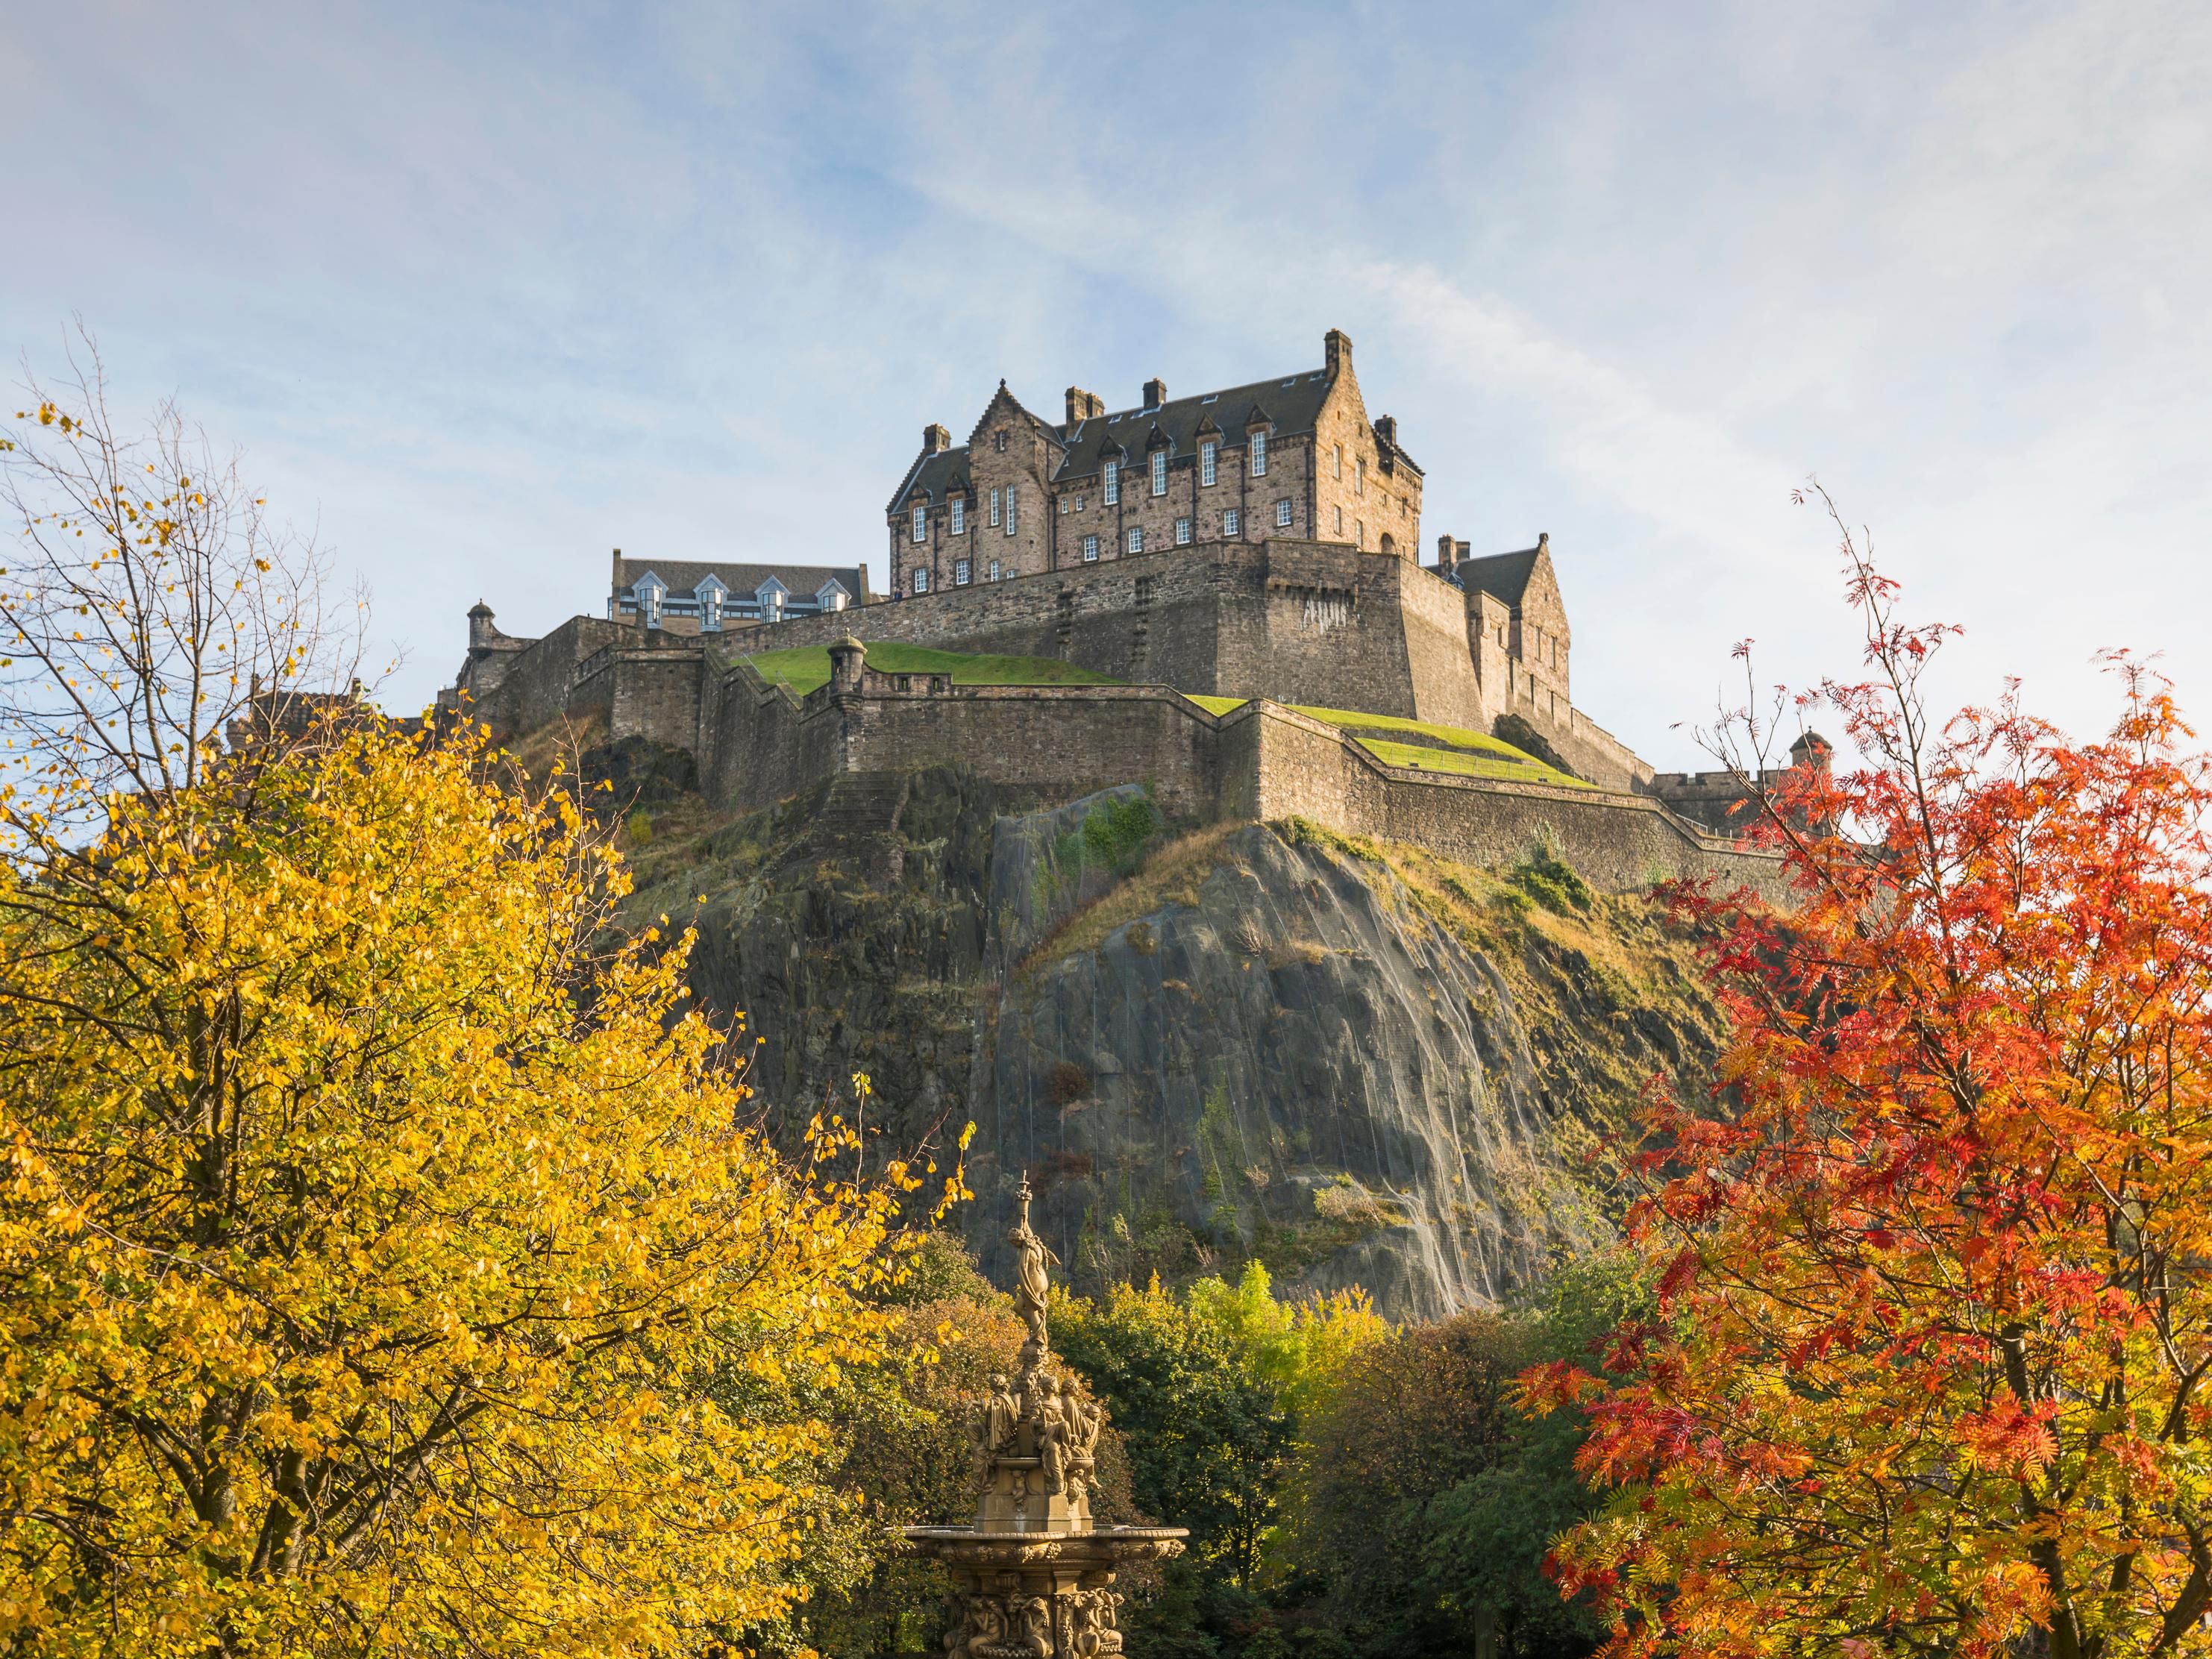 View of Edinburgh castle in the fall foliage